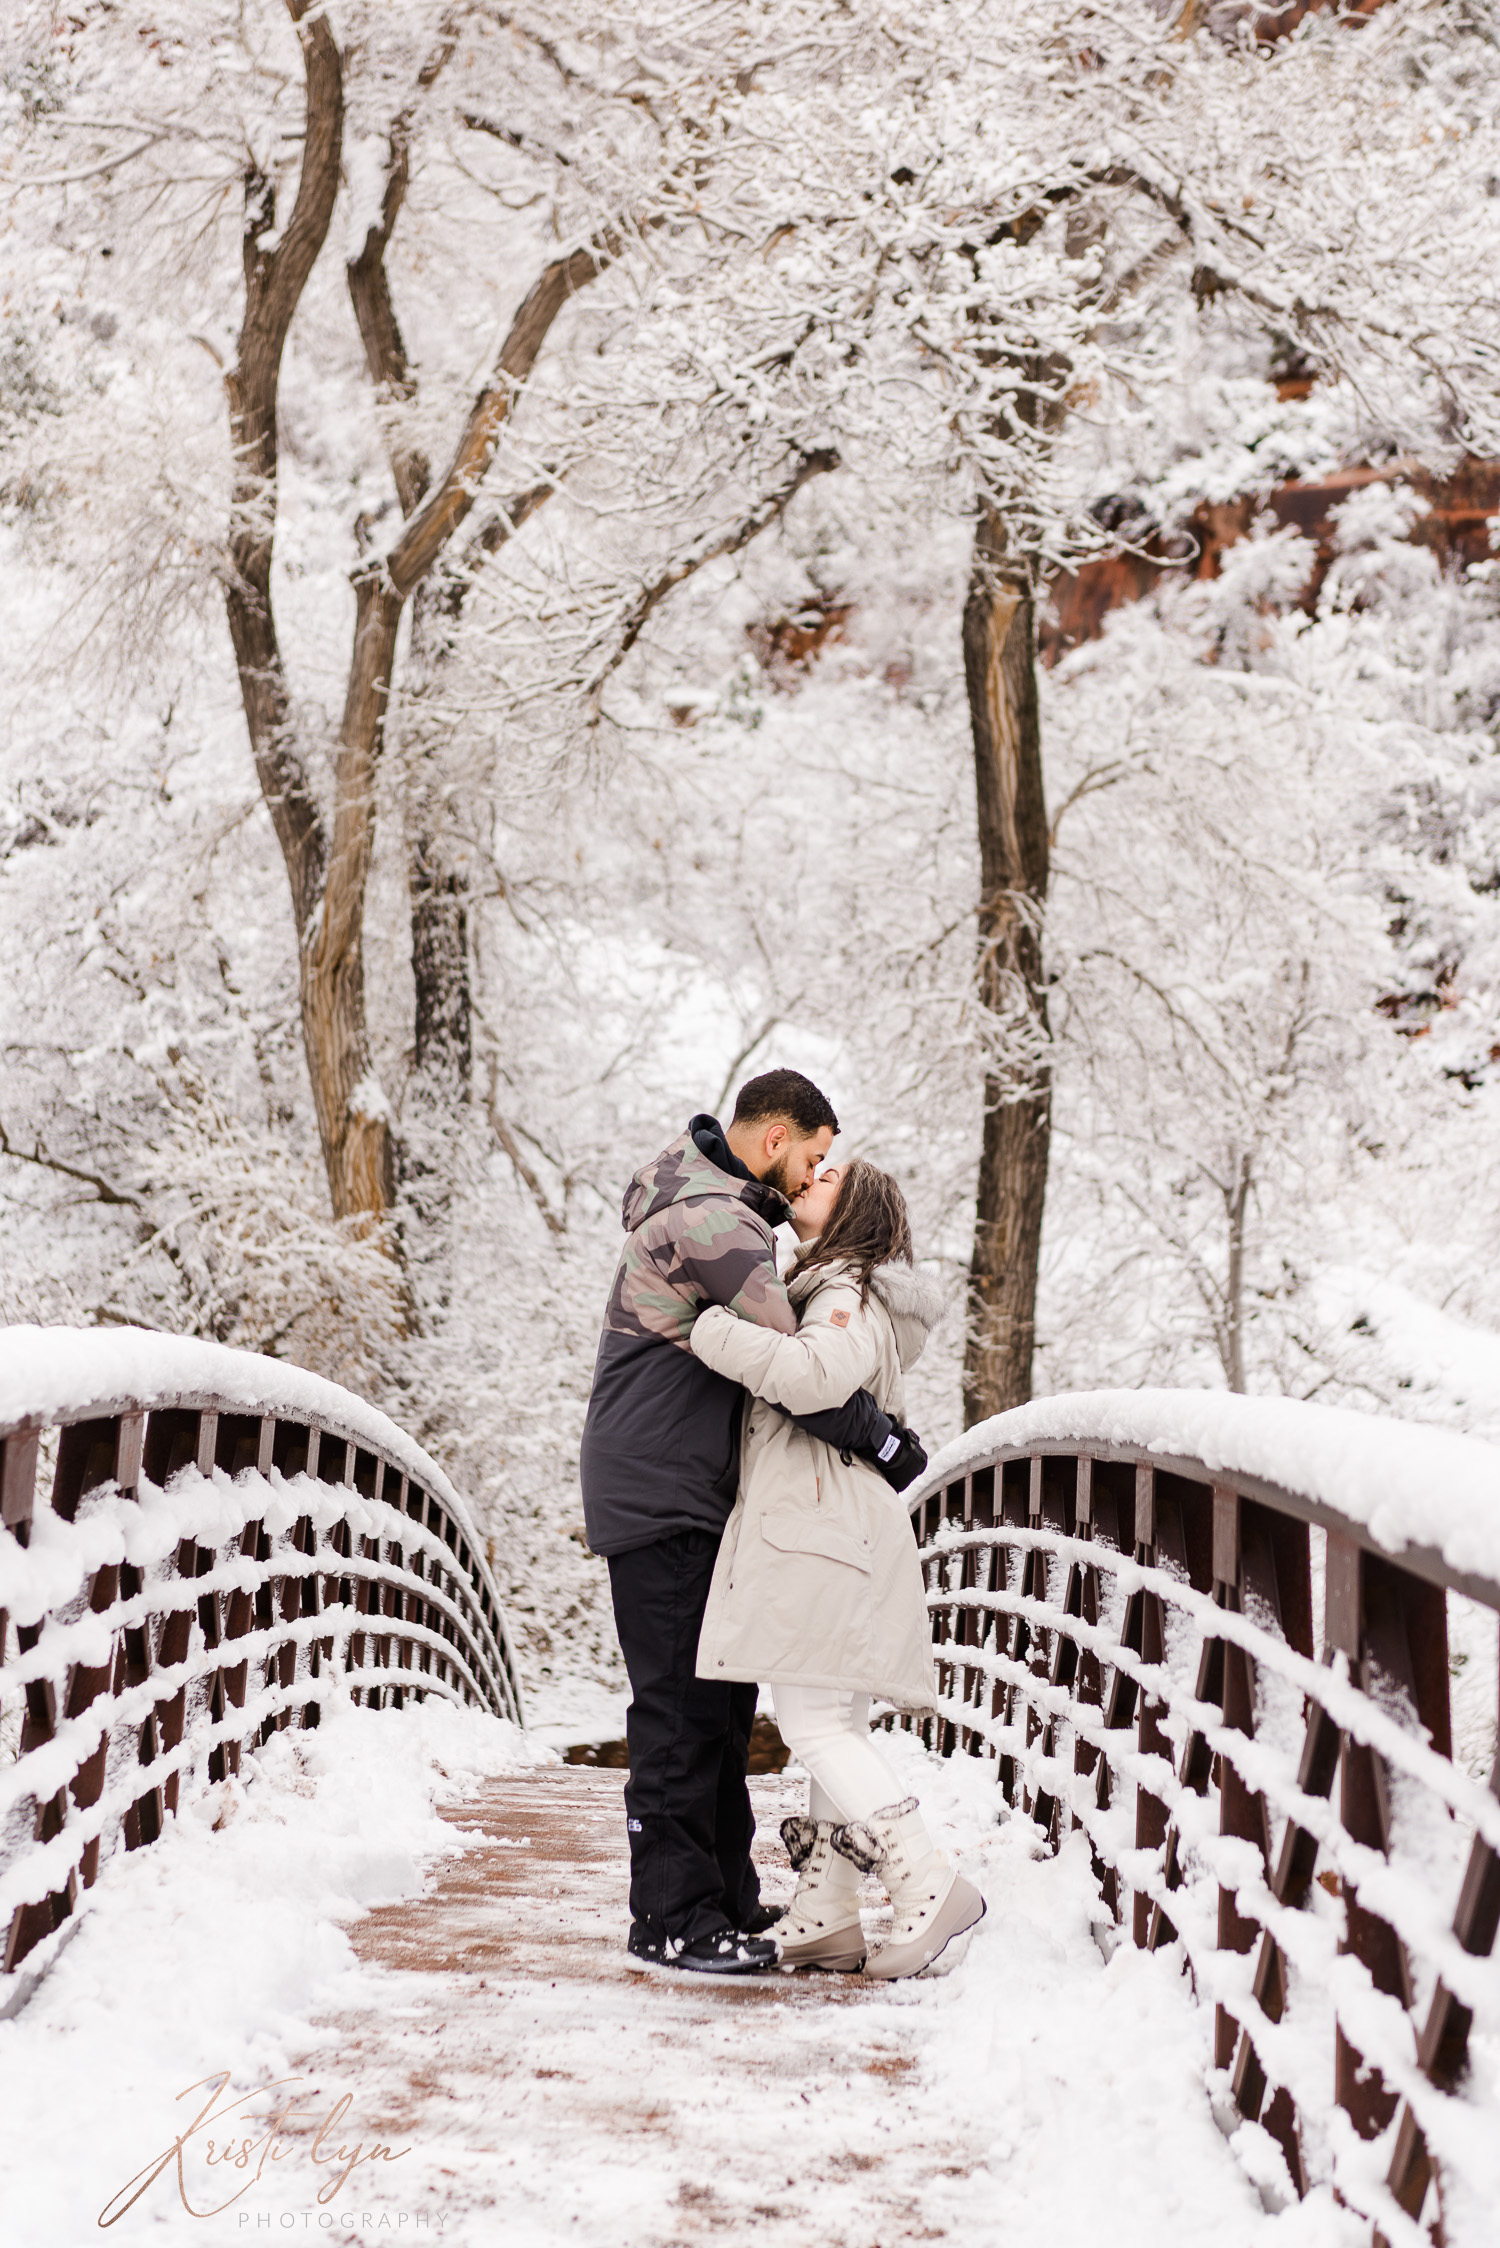 Couple kissing on a snowy bridge